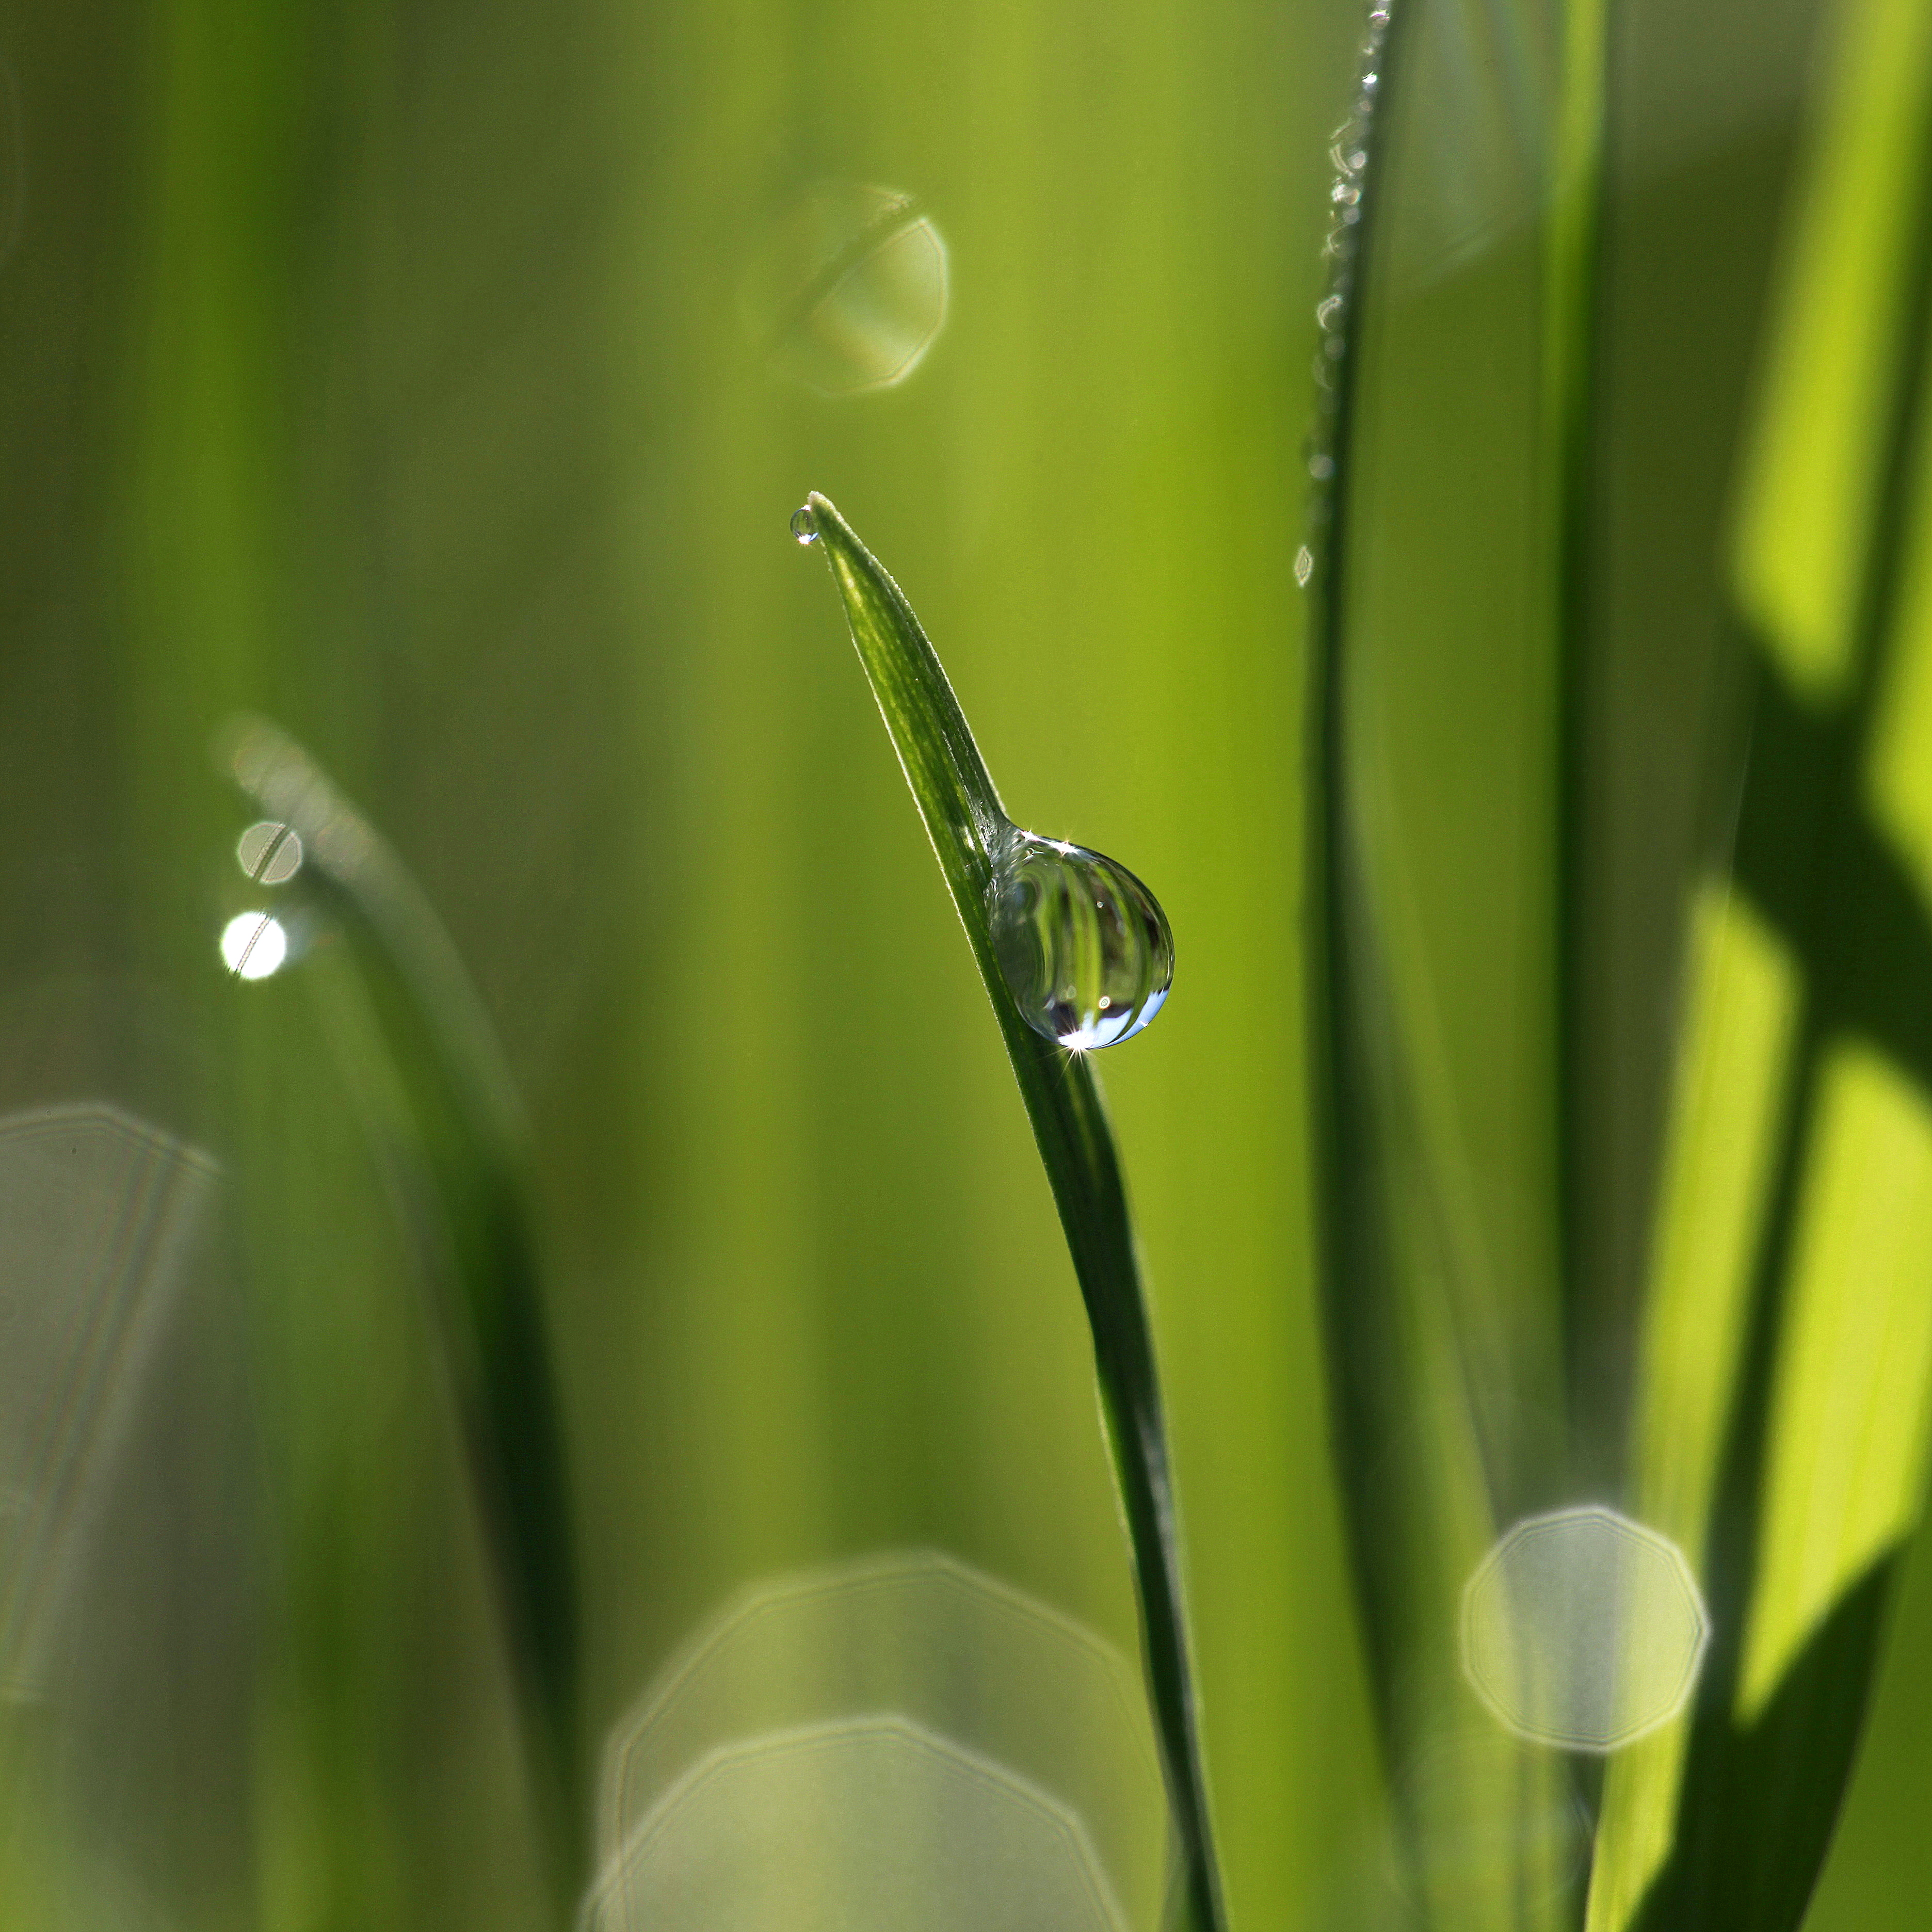 File:Wet blade of grass.jpg - Wikimedia Commons